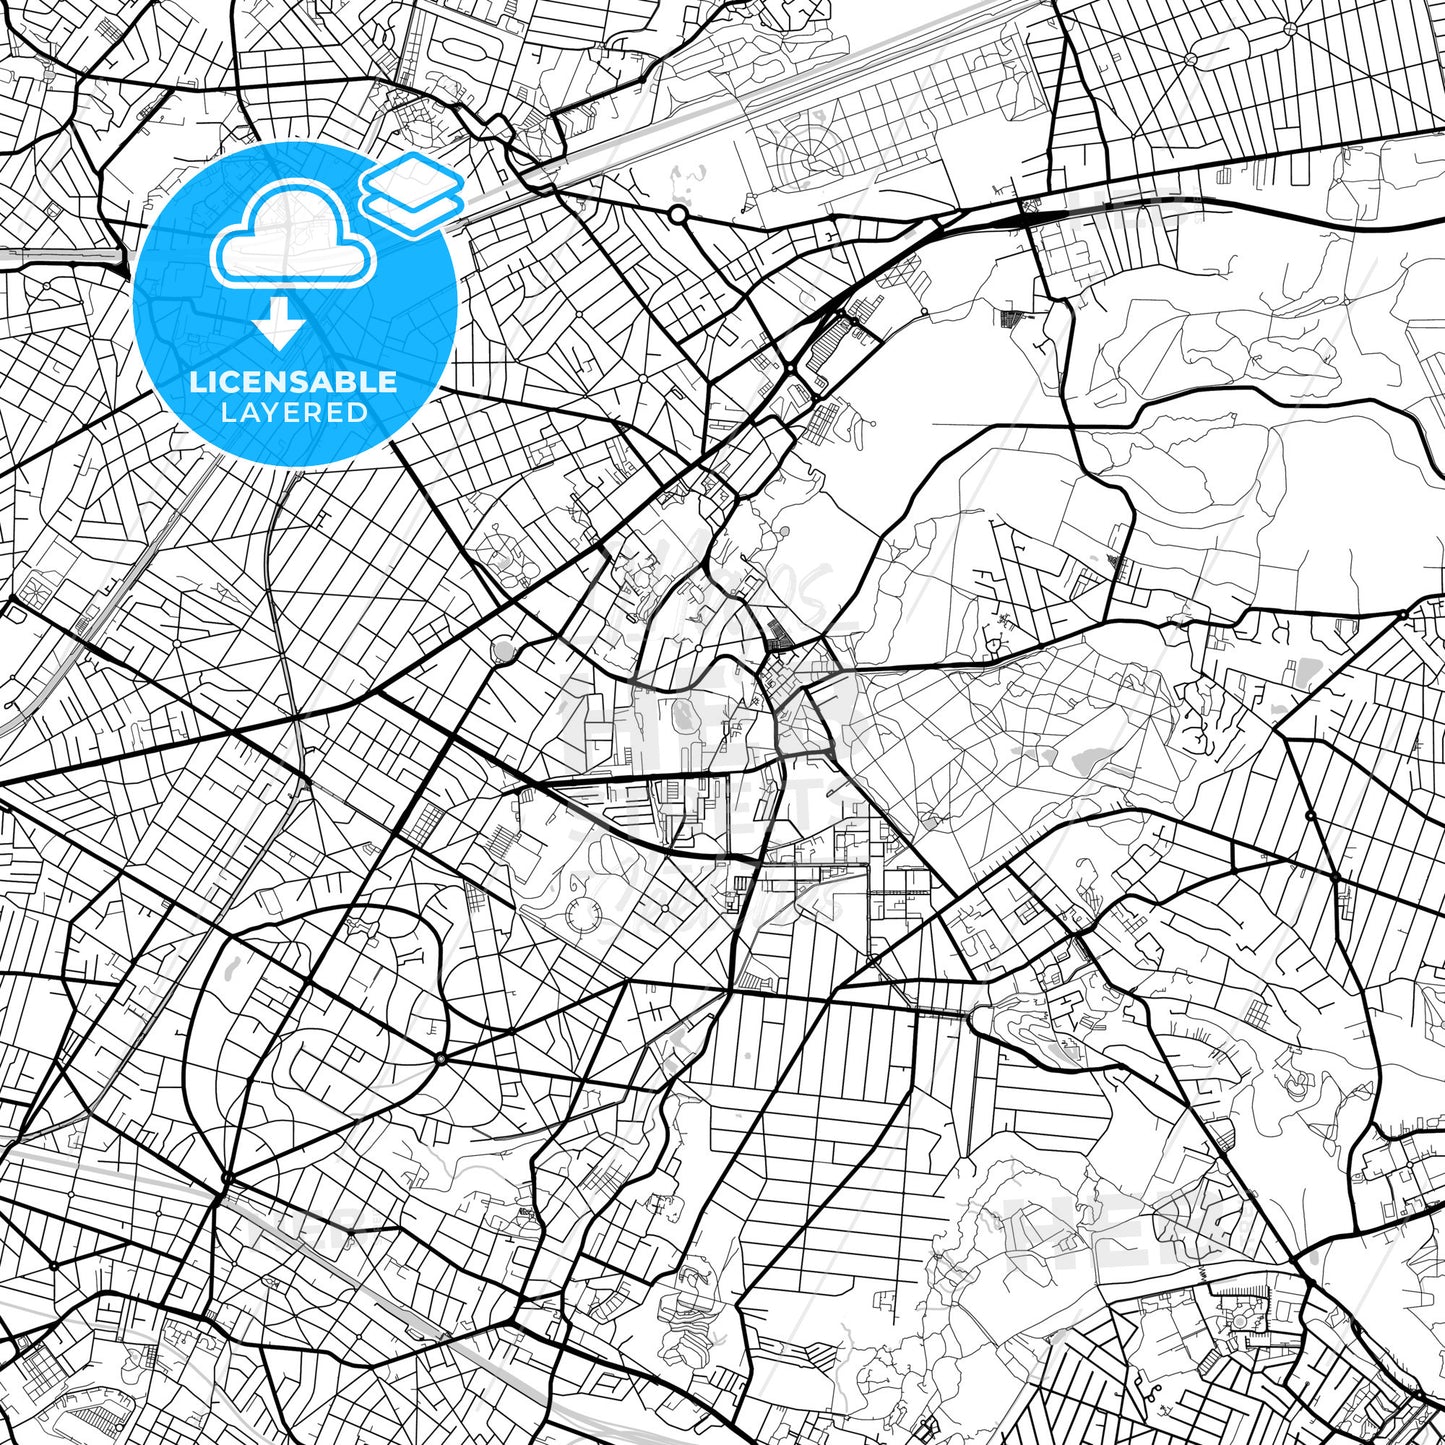 Layered PDF map of Clichy-sous-Bois, Seine-Saint-Denis, France